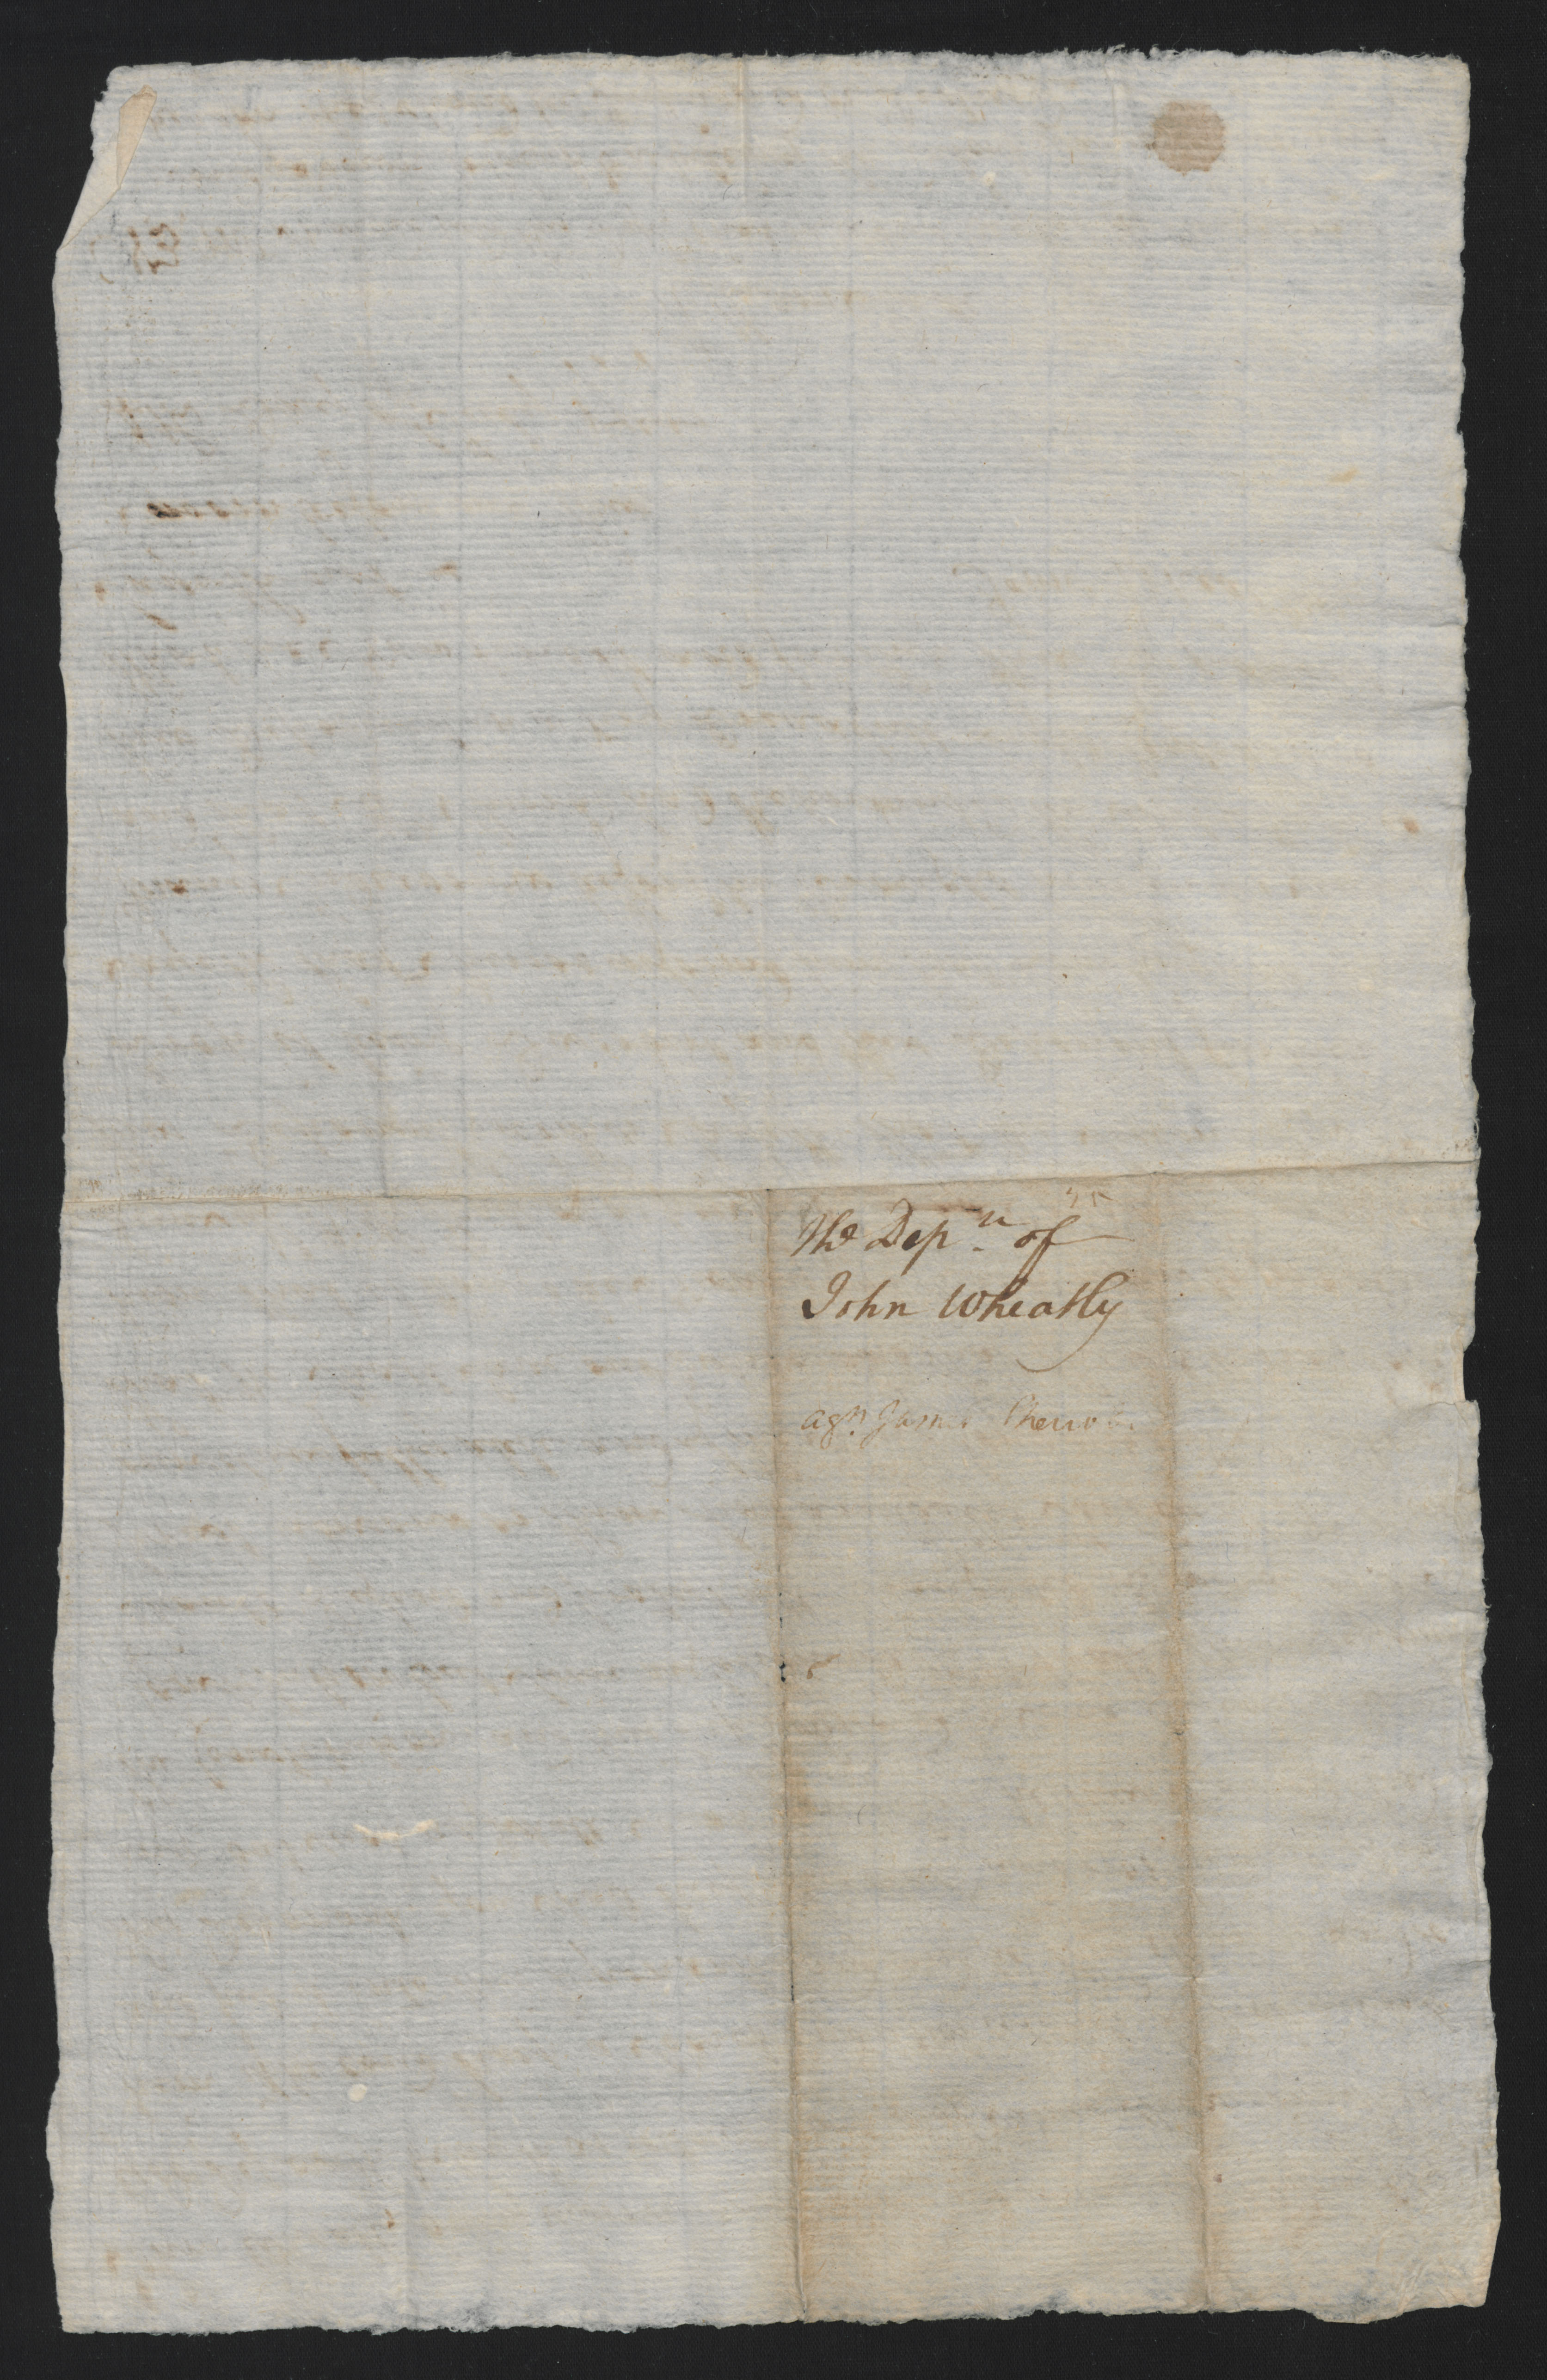 Deposition of John Wheatley, 4 July 1777, page 2